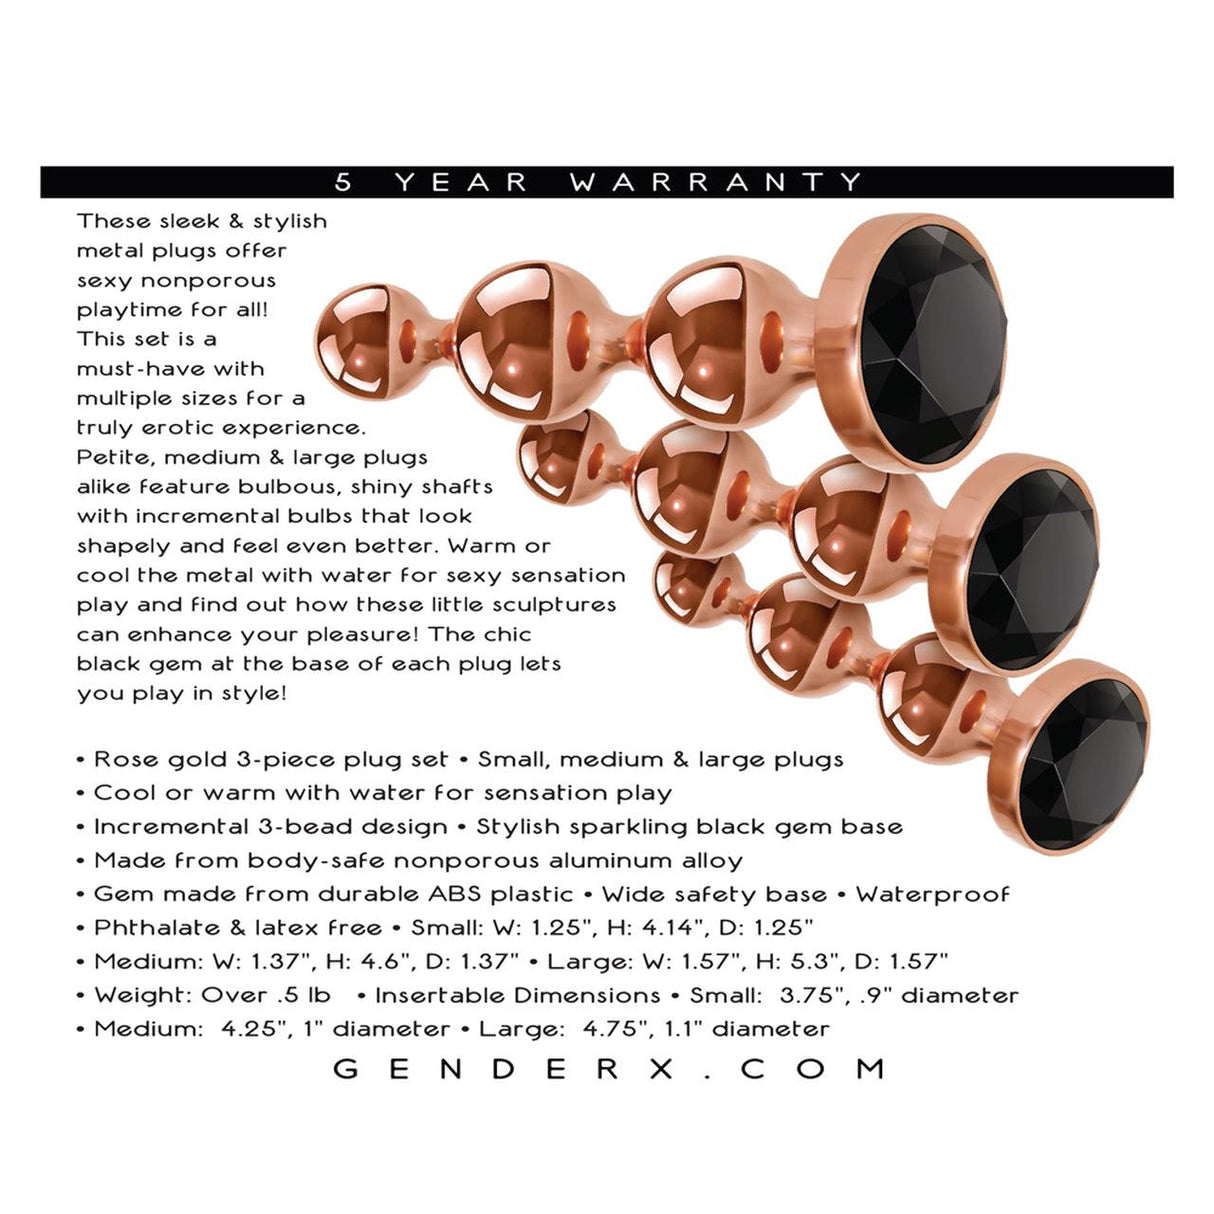 Gender X Gold Digger Metal Plug Set